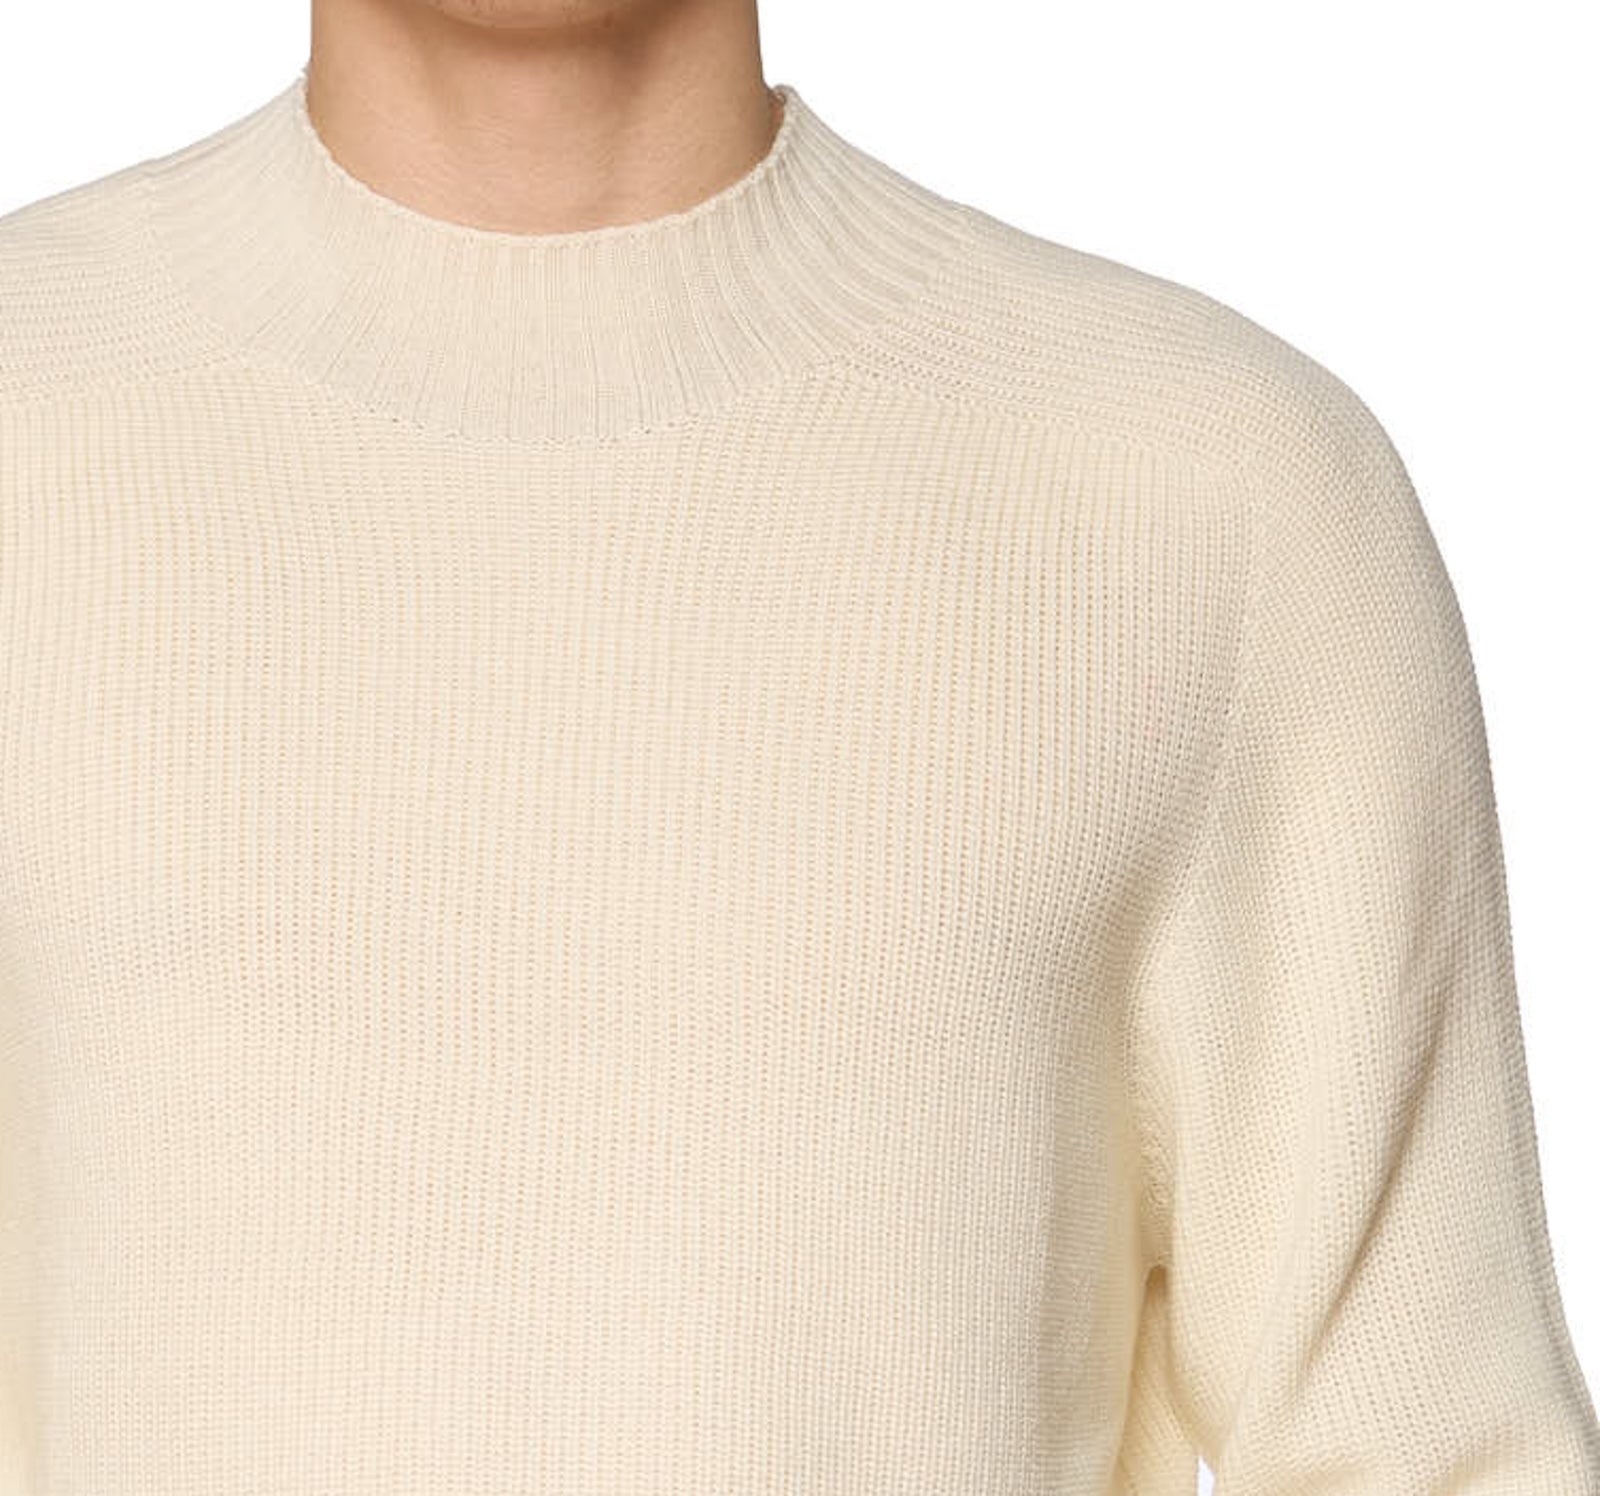 GRAN SASSO for VANNUCCI Cream Virgin Wool Knit Sweater EU 56 NEW US XL